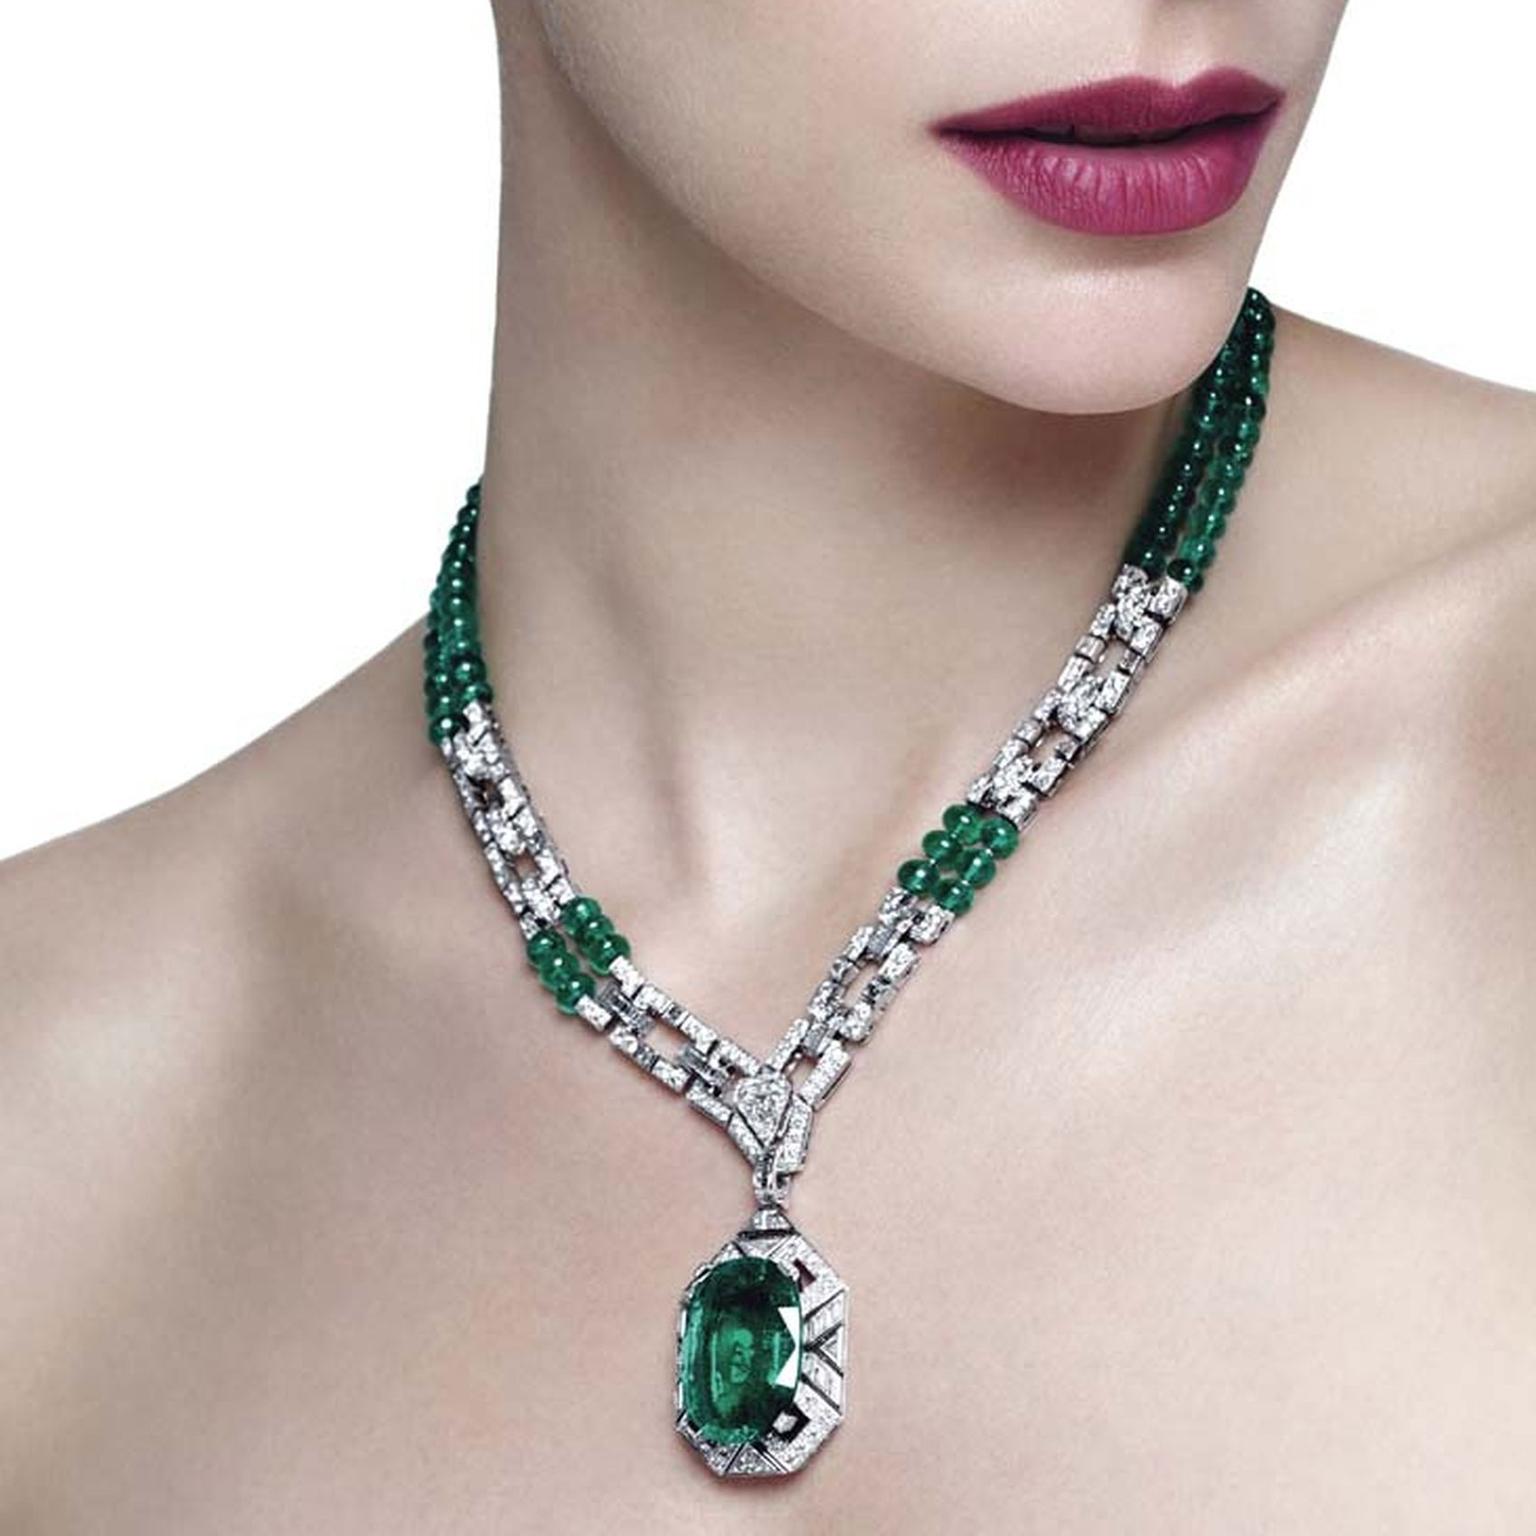 Cartier's Viracocha platinum emerald necklace